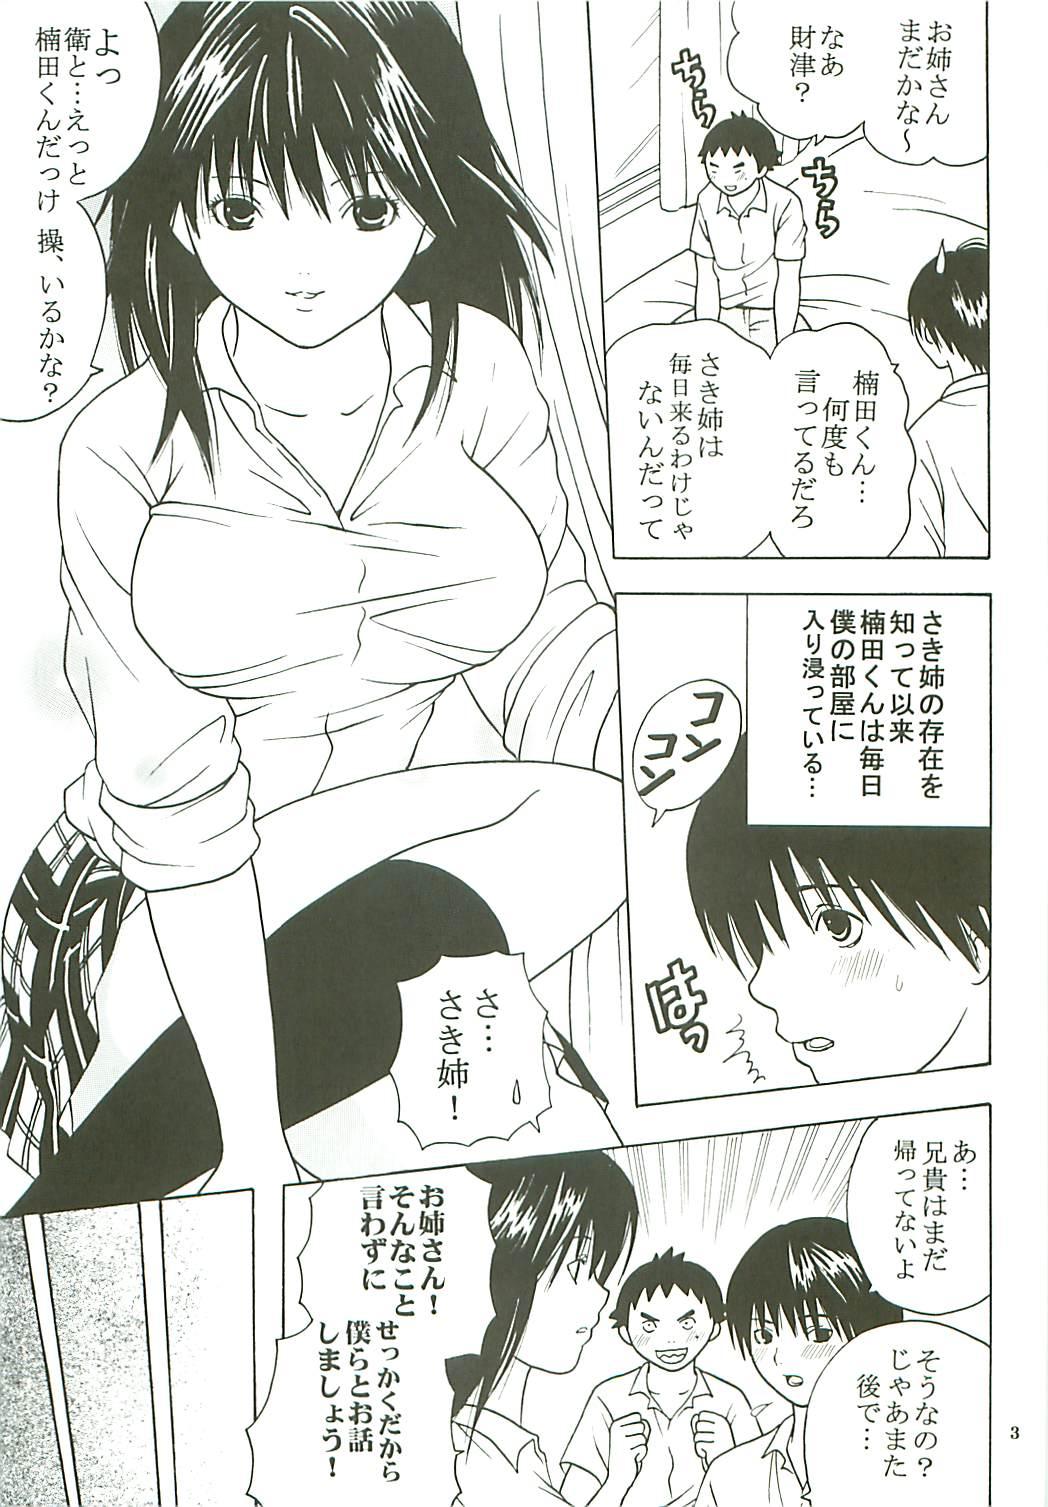 Nudity Chitsui Gentei Nakadashi Limited vol.3 - Hatsukoi limited Teen Hardcore - Page 4